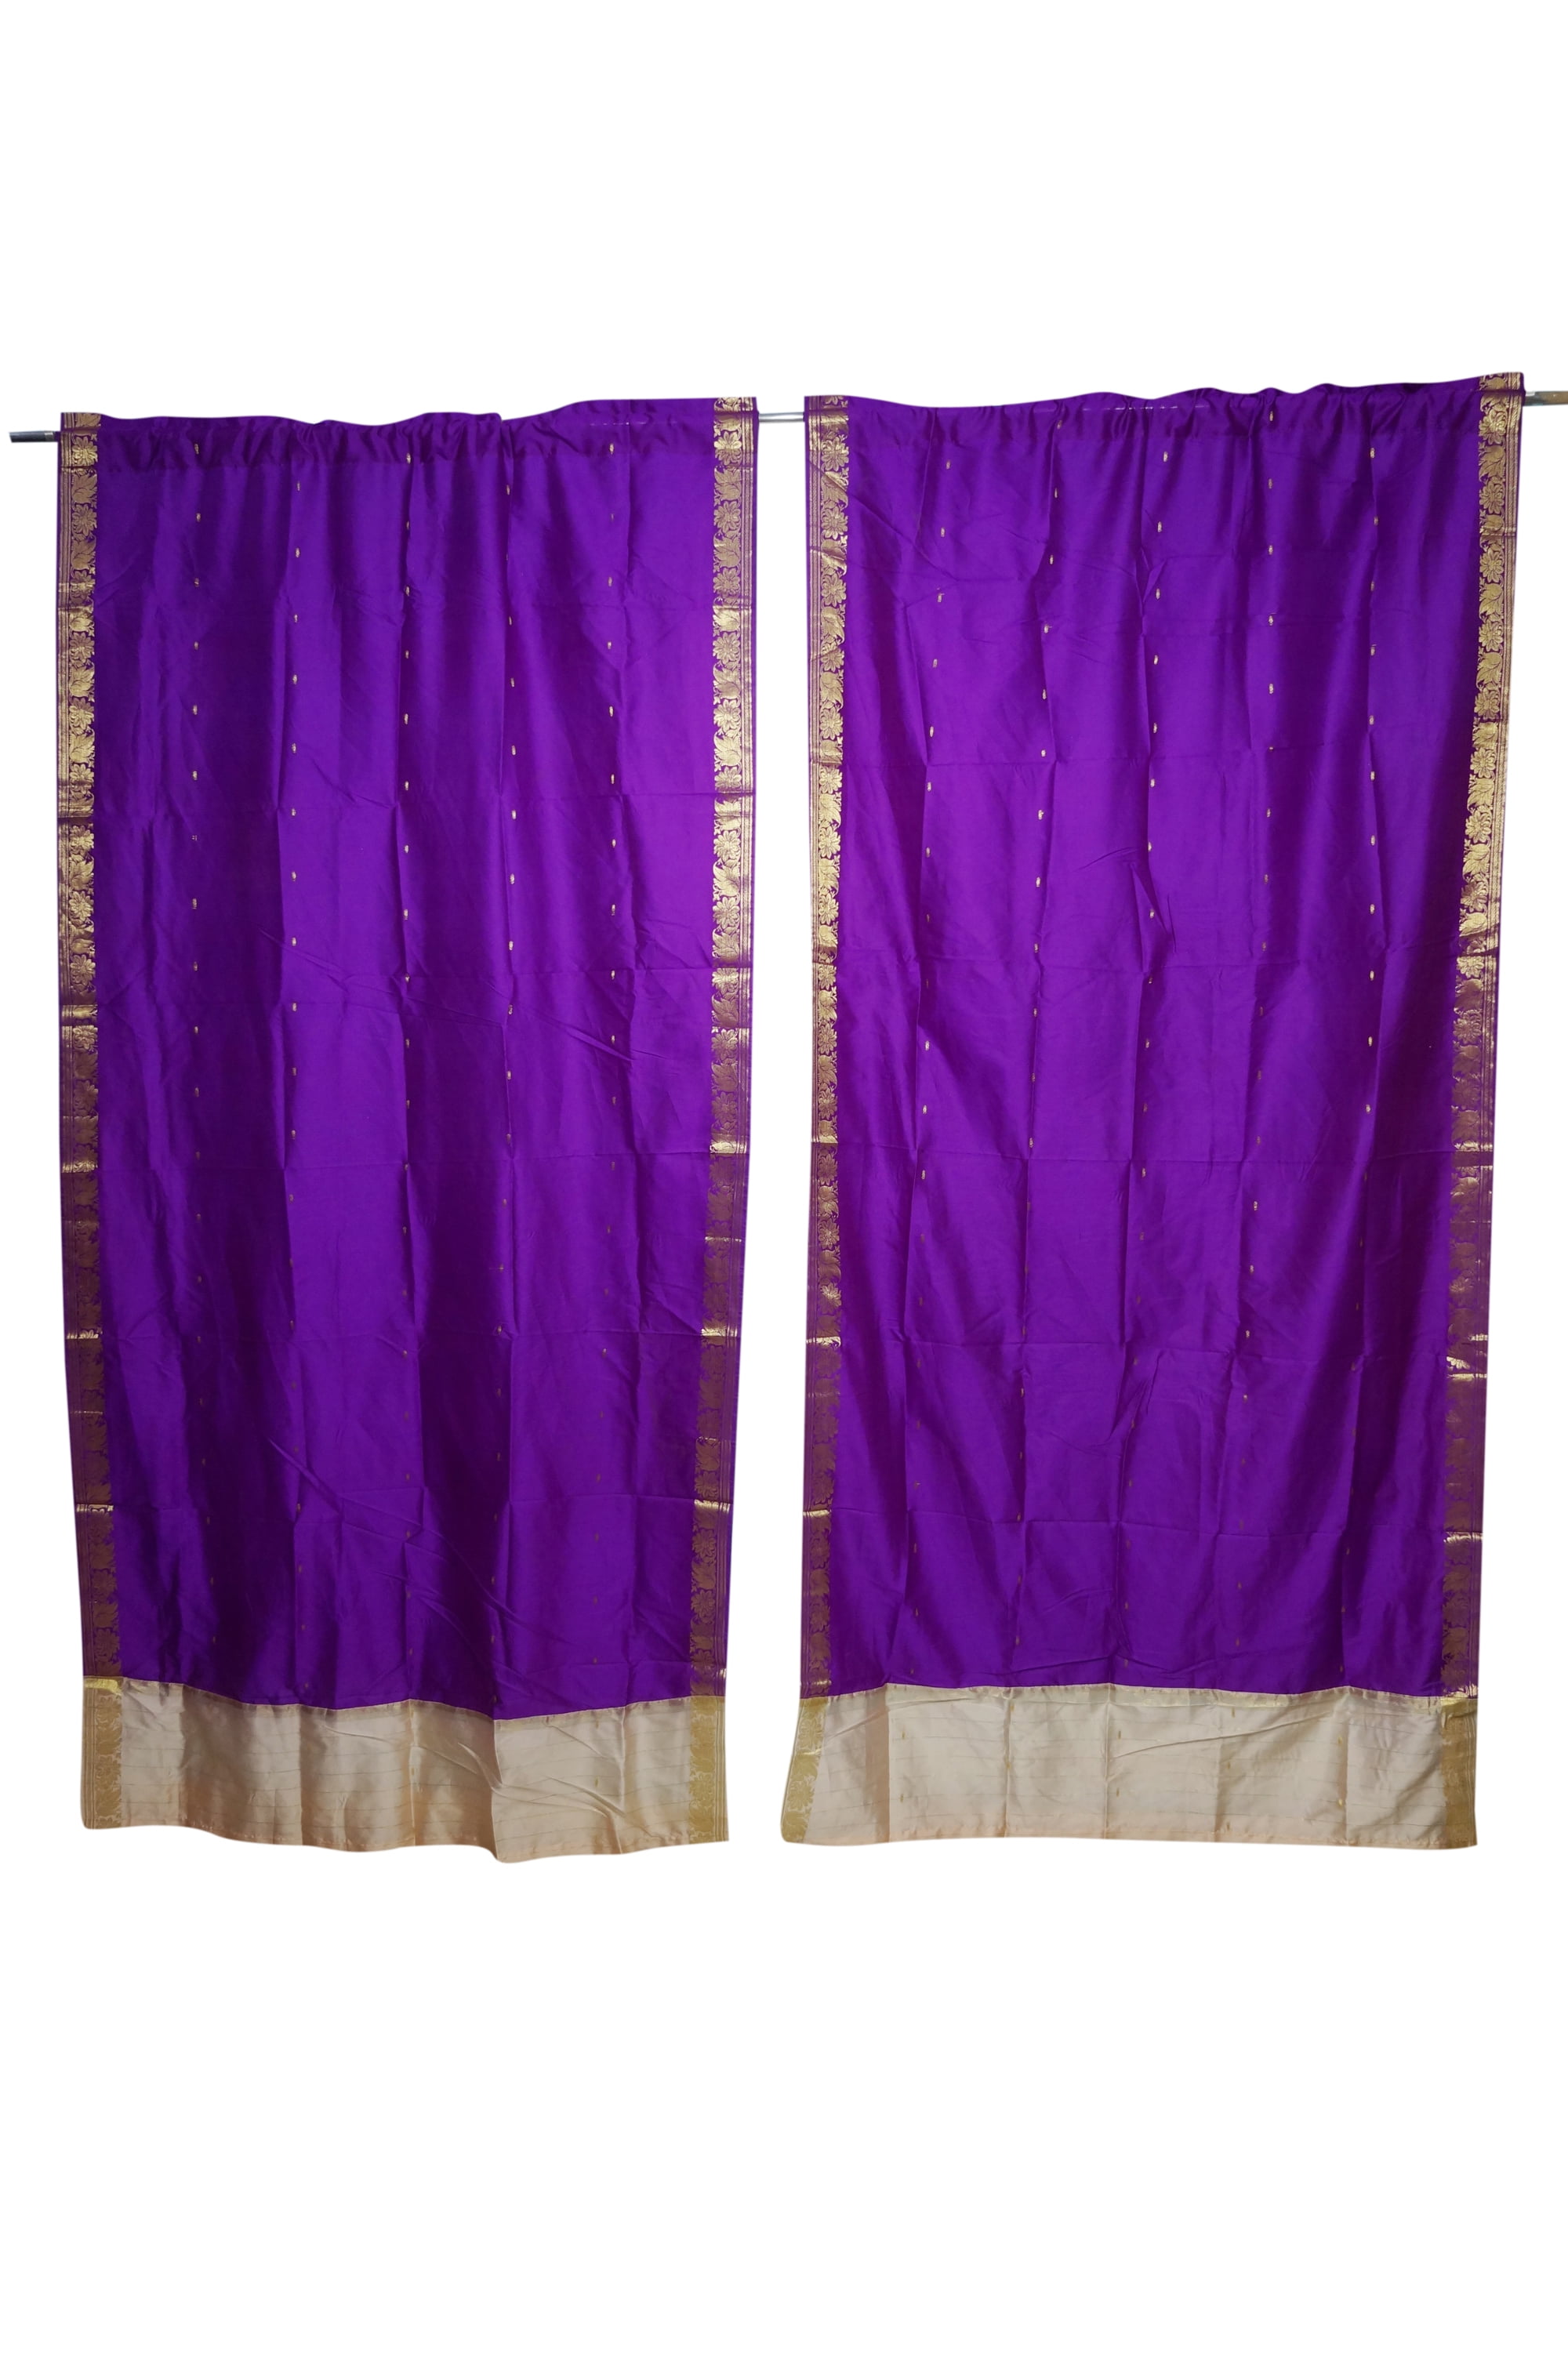 Mogul 2 Indian Sari Curtain Drape Panel Window Treatment Brocade Border ...